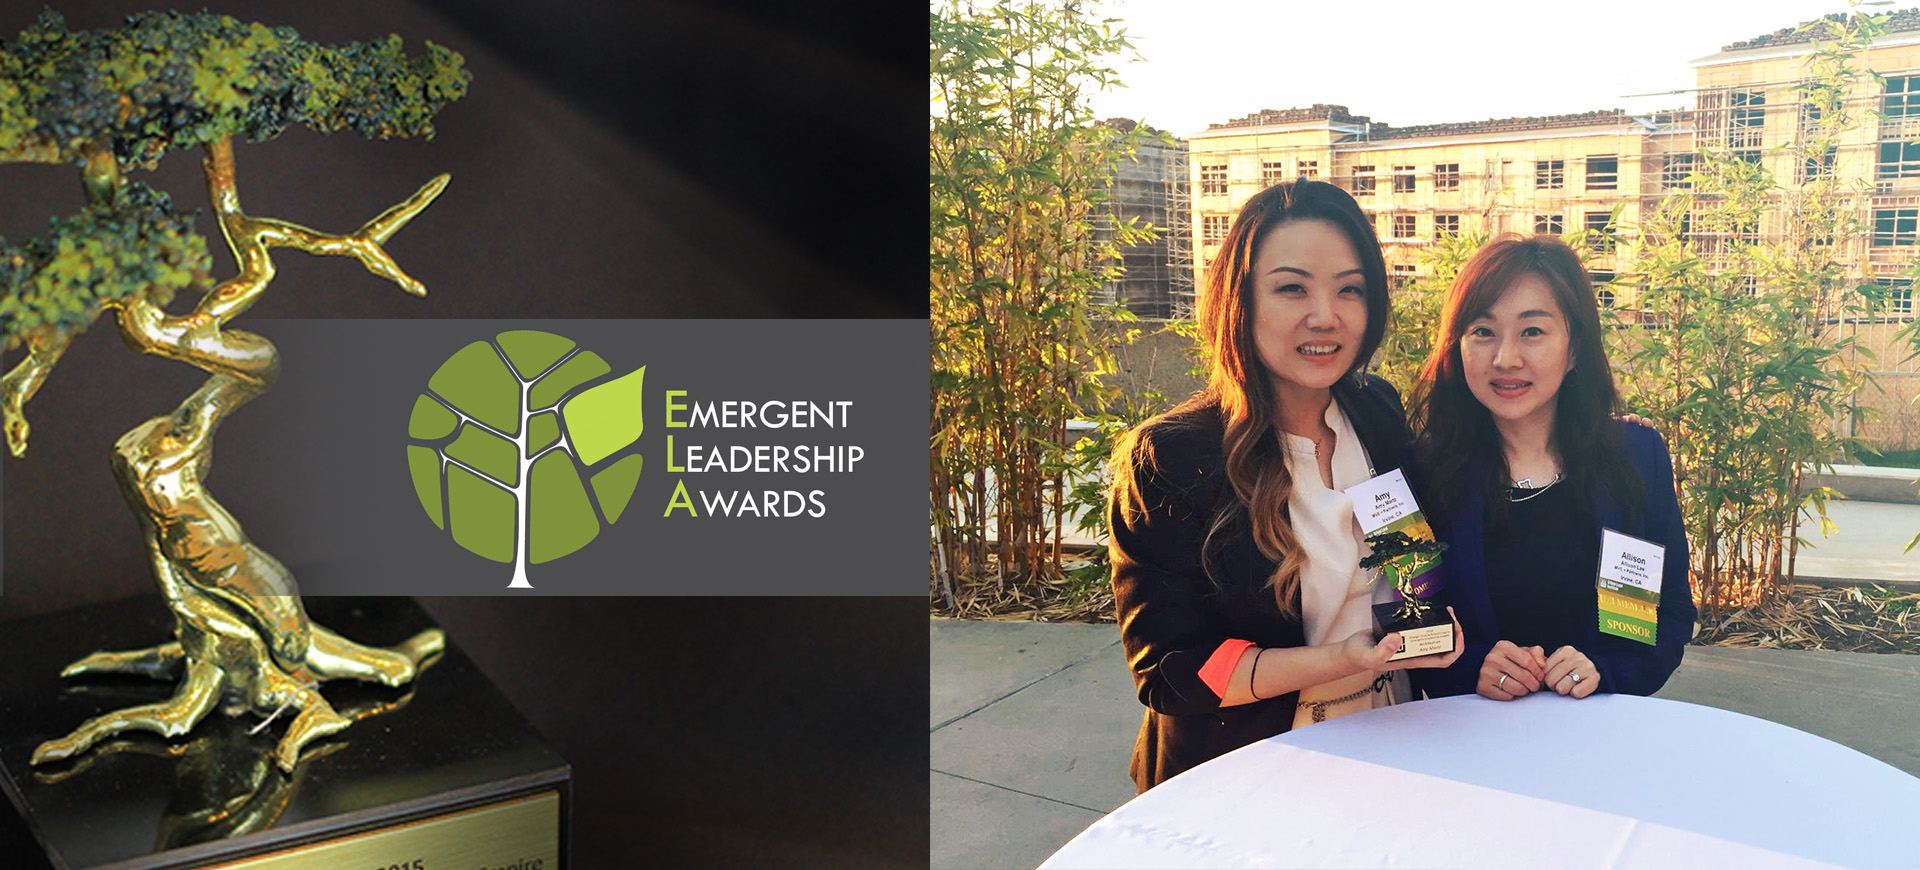 MVE Congratulates Amy Martz, AIA, Recipient of the 2016 ULI Emergent Leadership Awards!